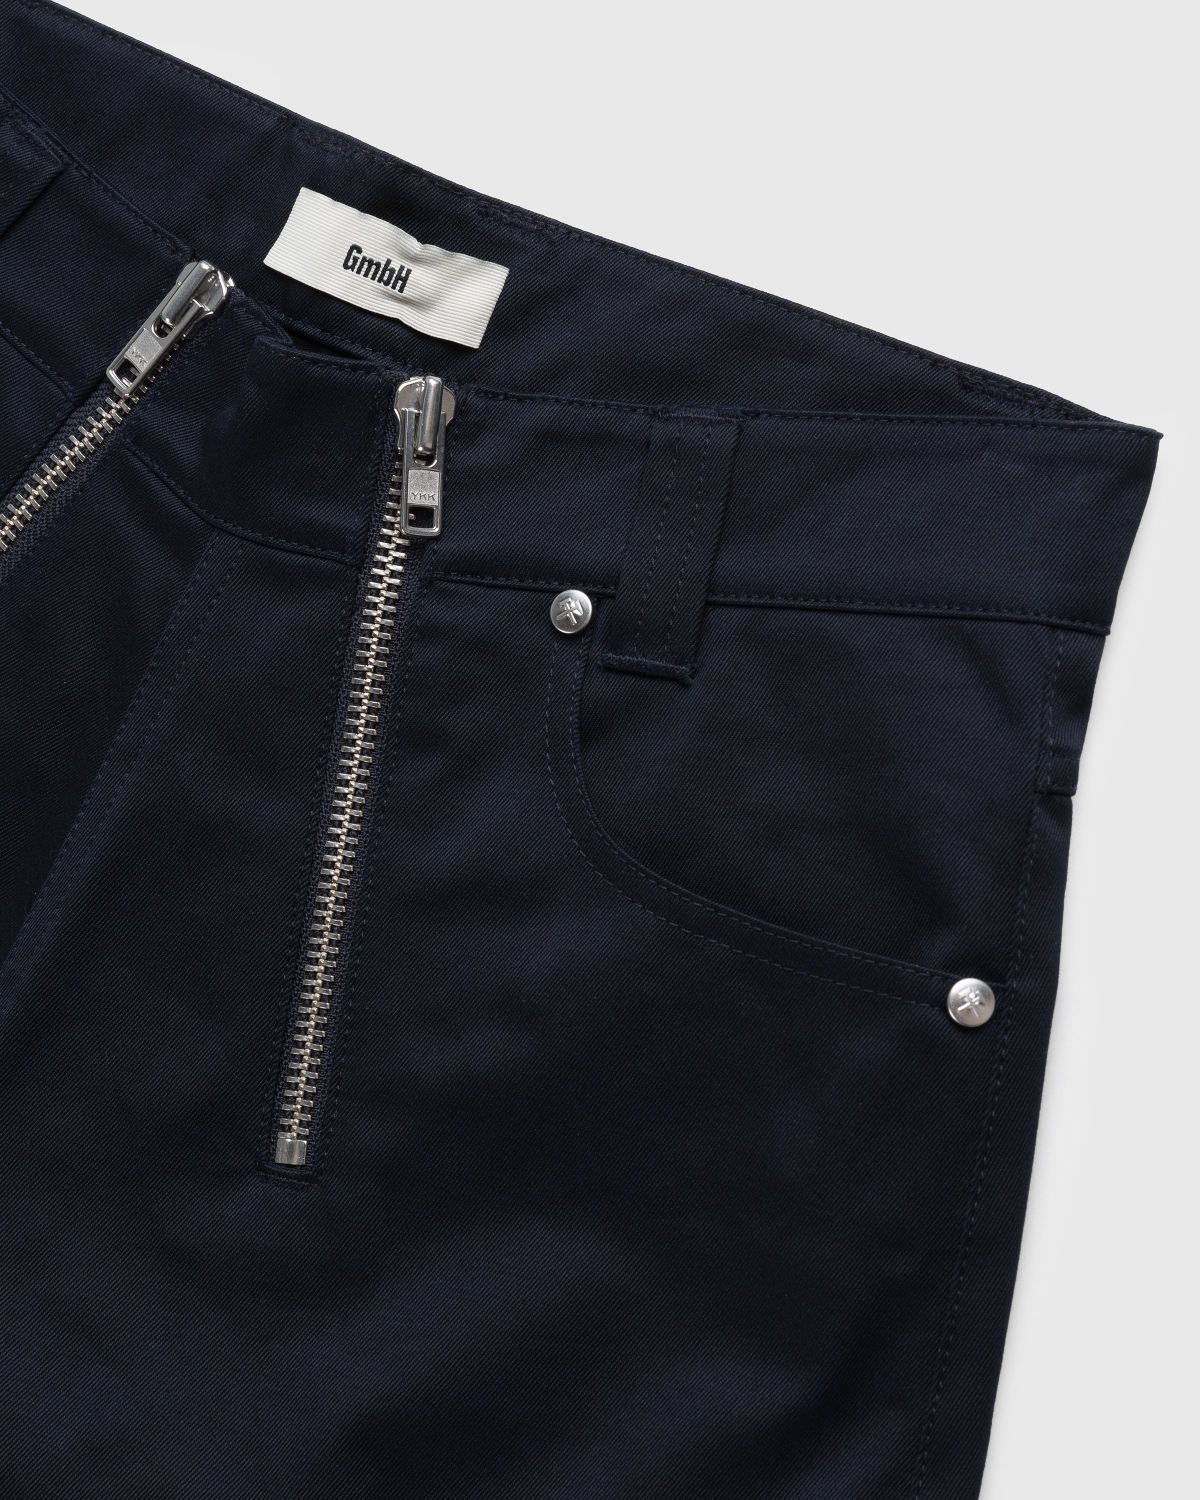 GmbH – Amir Double Zip Shorts Navy - Shorts - Blue - Image 5